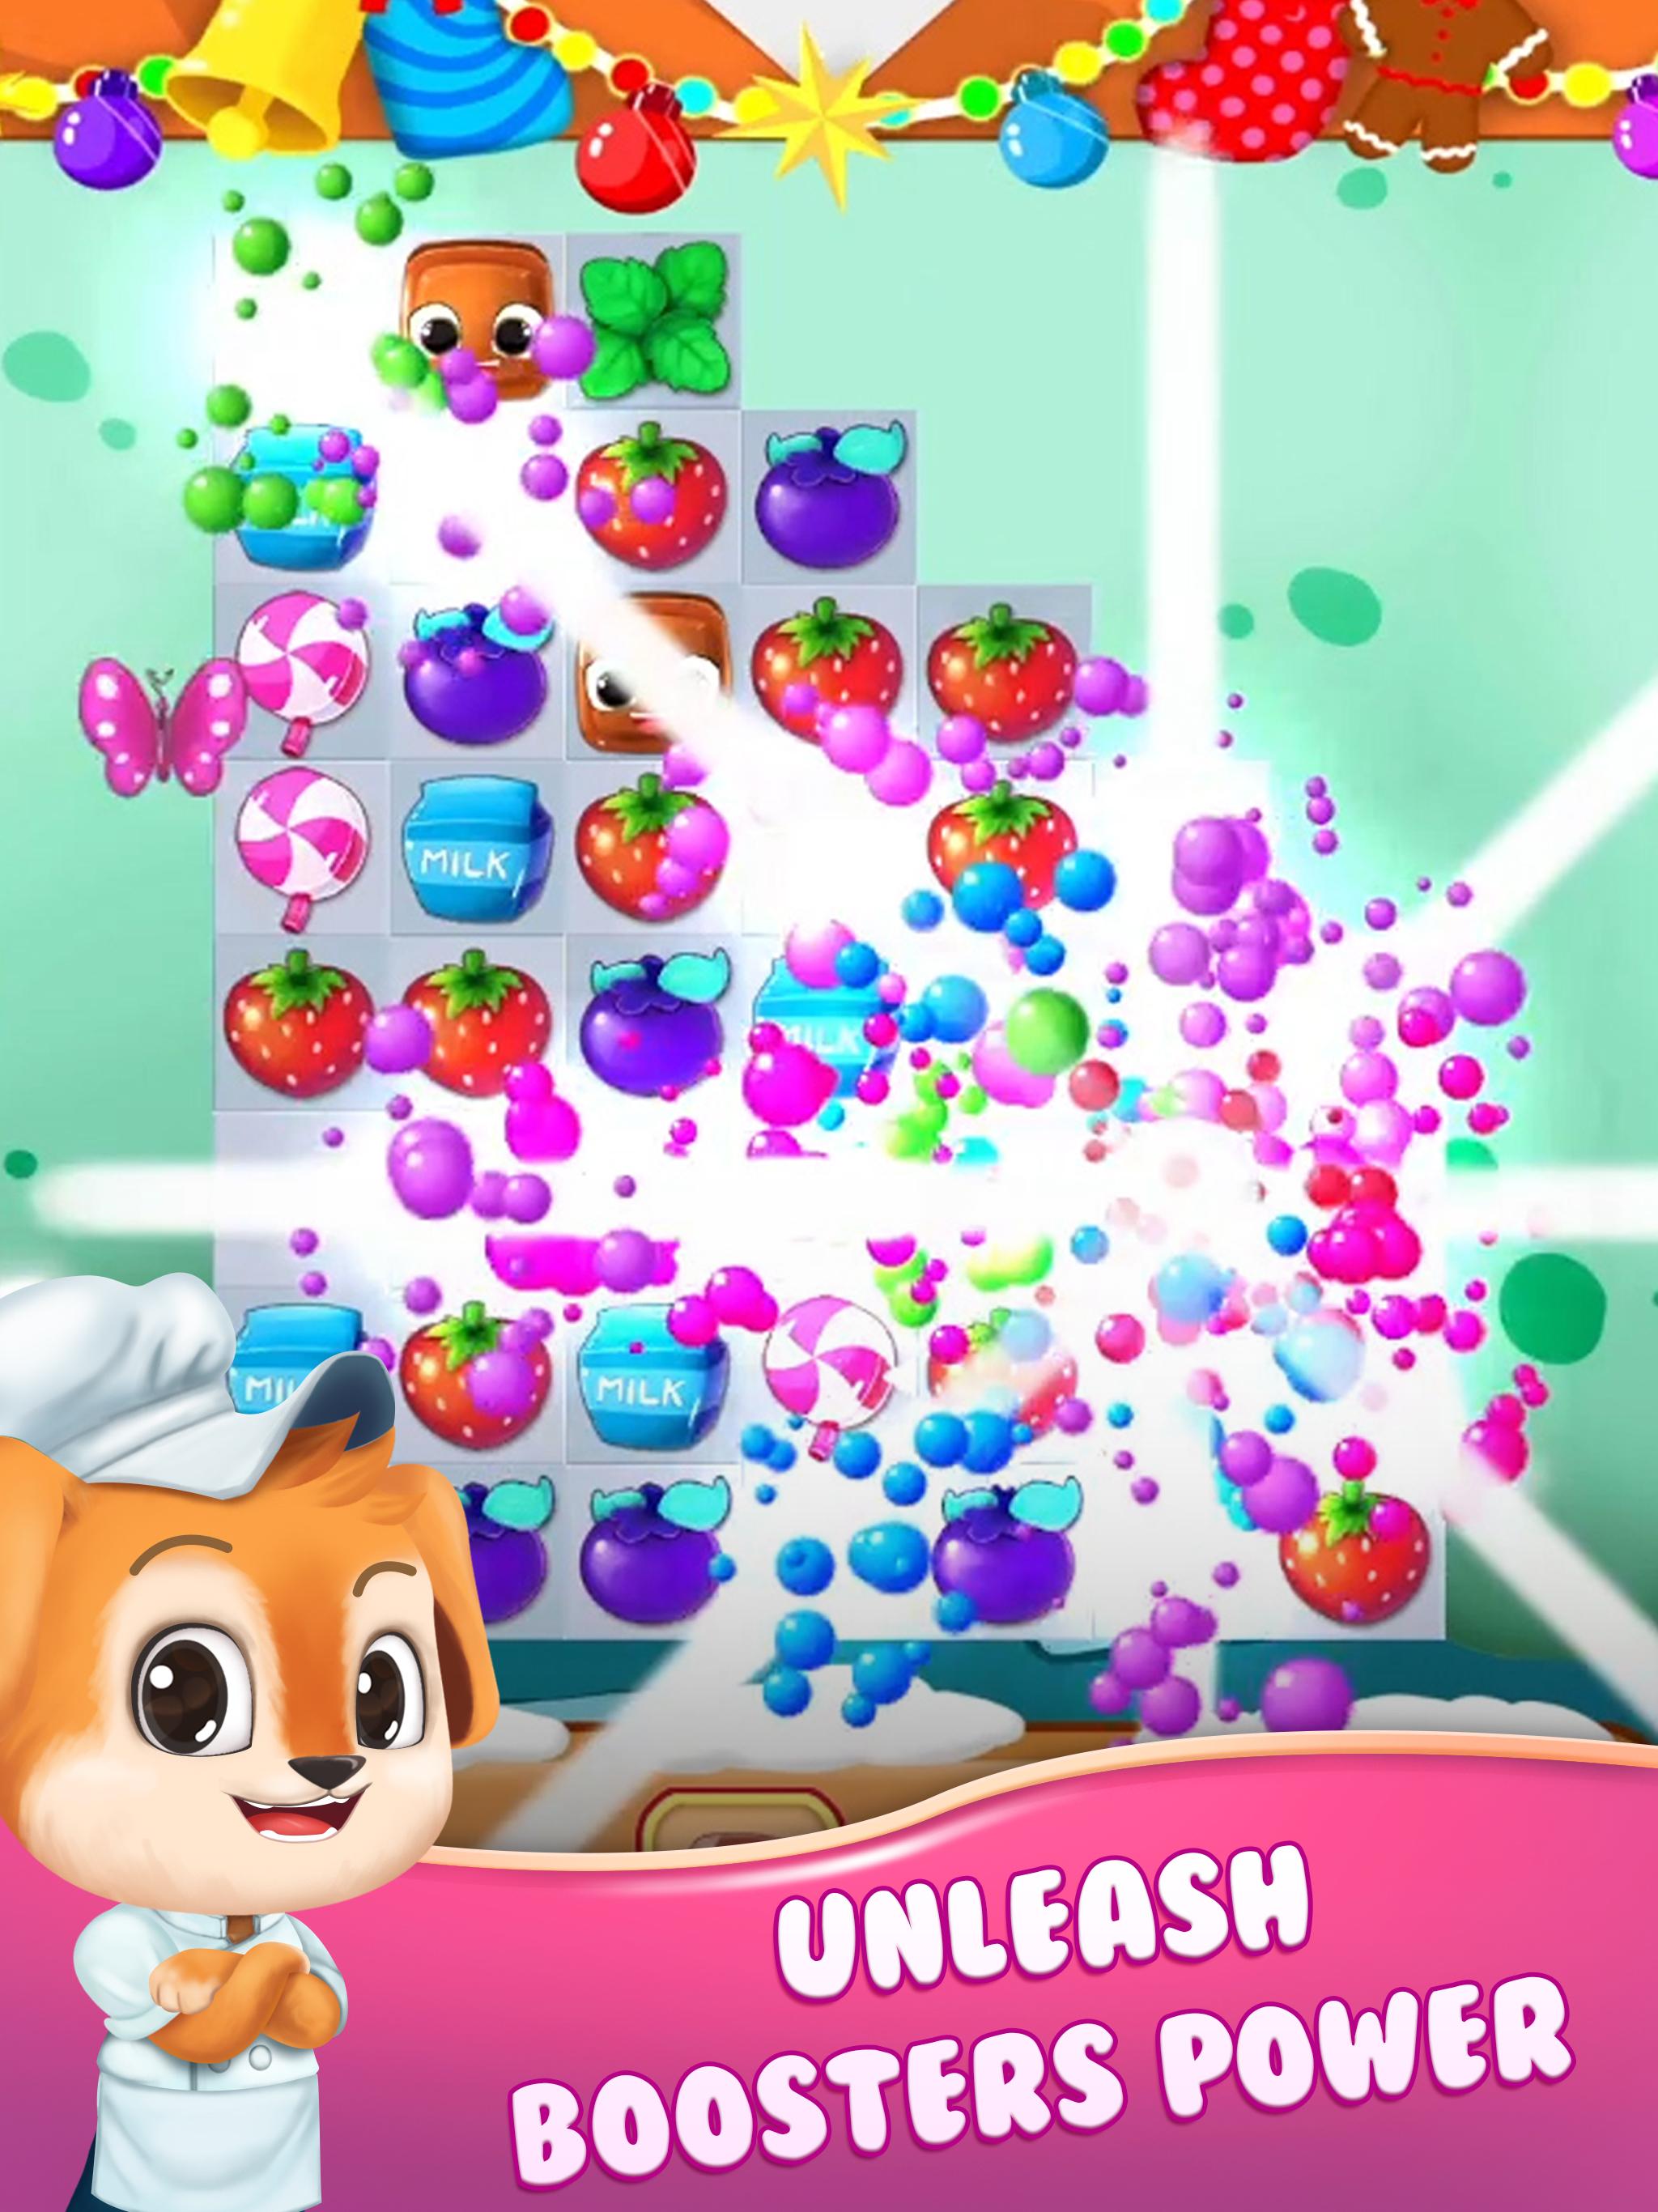 Cake Crush Link Match 3 Puzzle Game 1.2.1 Screenshot 14